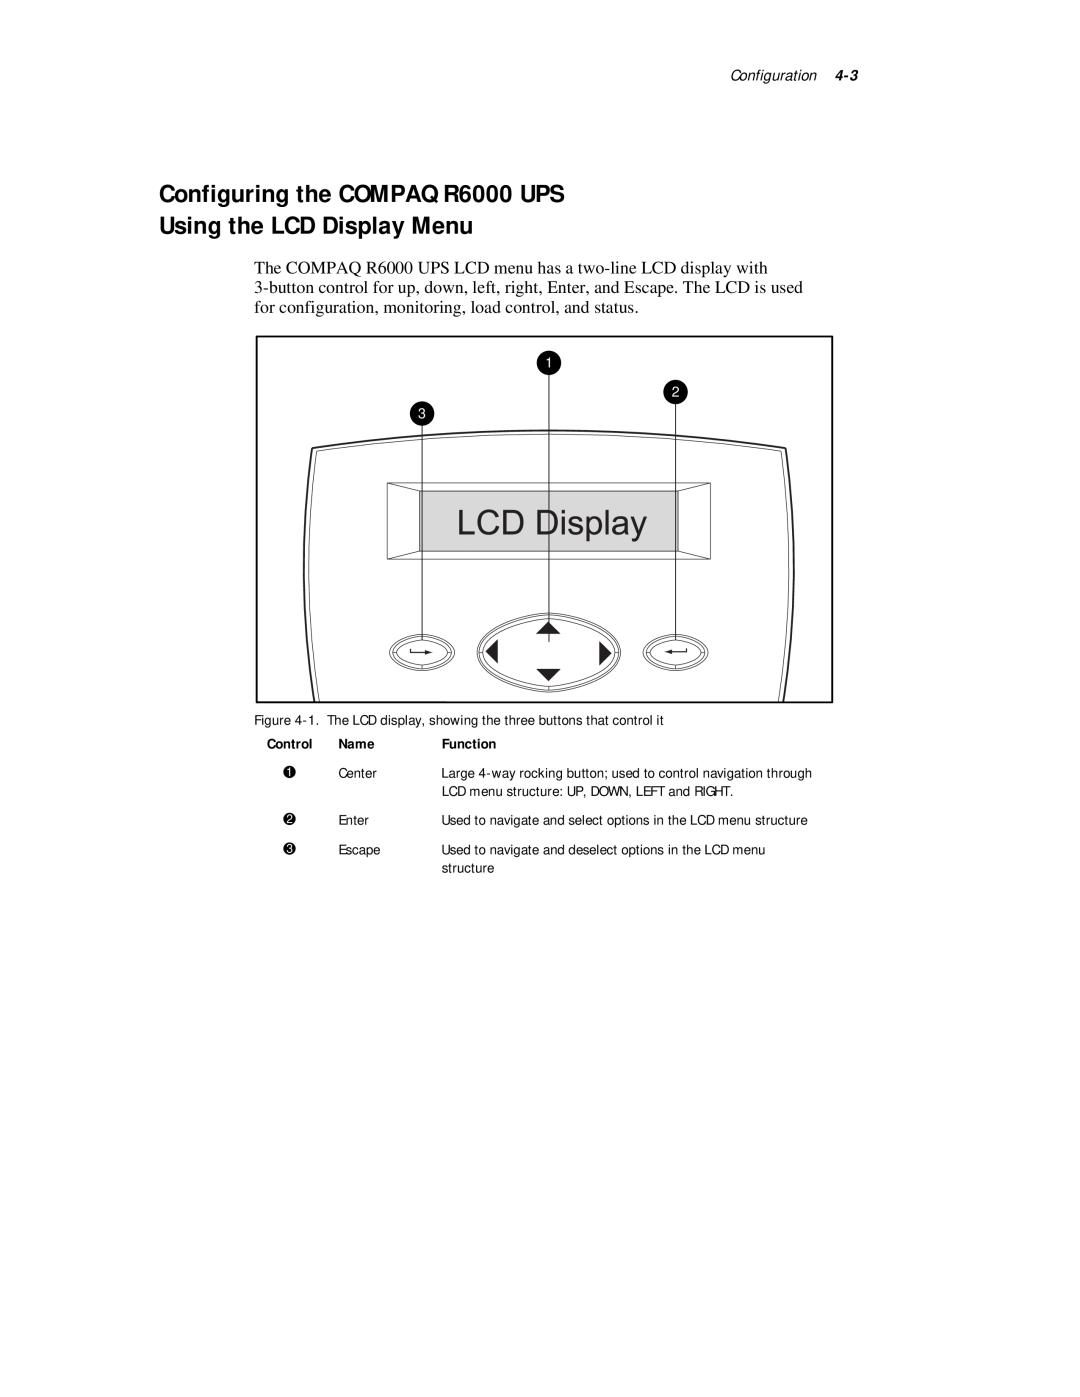 Compaq R6000 Series manual Configuring the COMPAQ R6000 UPS Using the LCD Display Menu, Configuration 